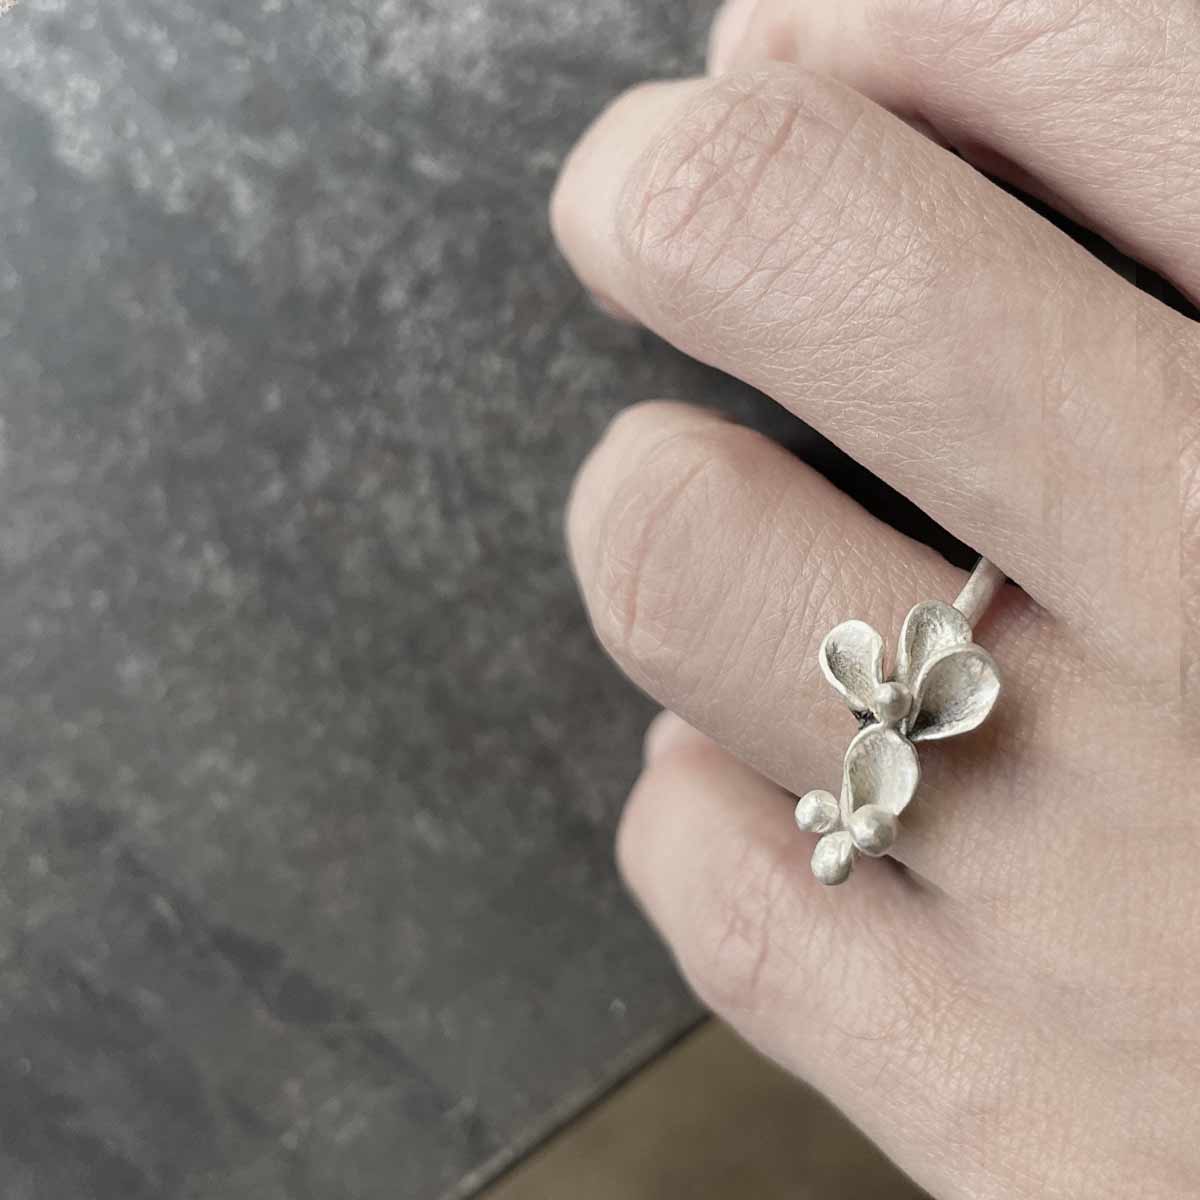 Botanical ring / טבעת בוטנית - studio oh design